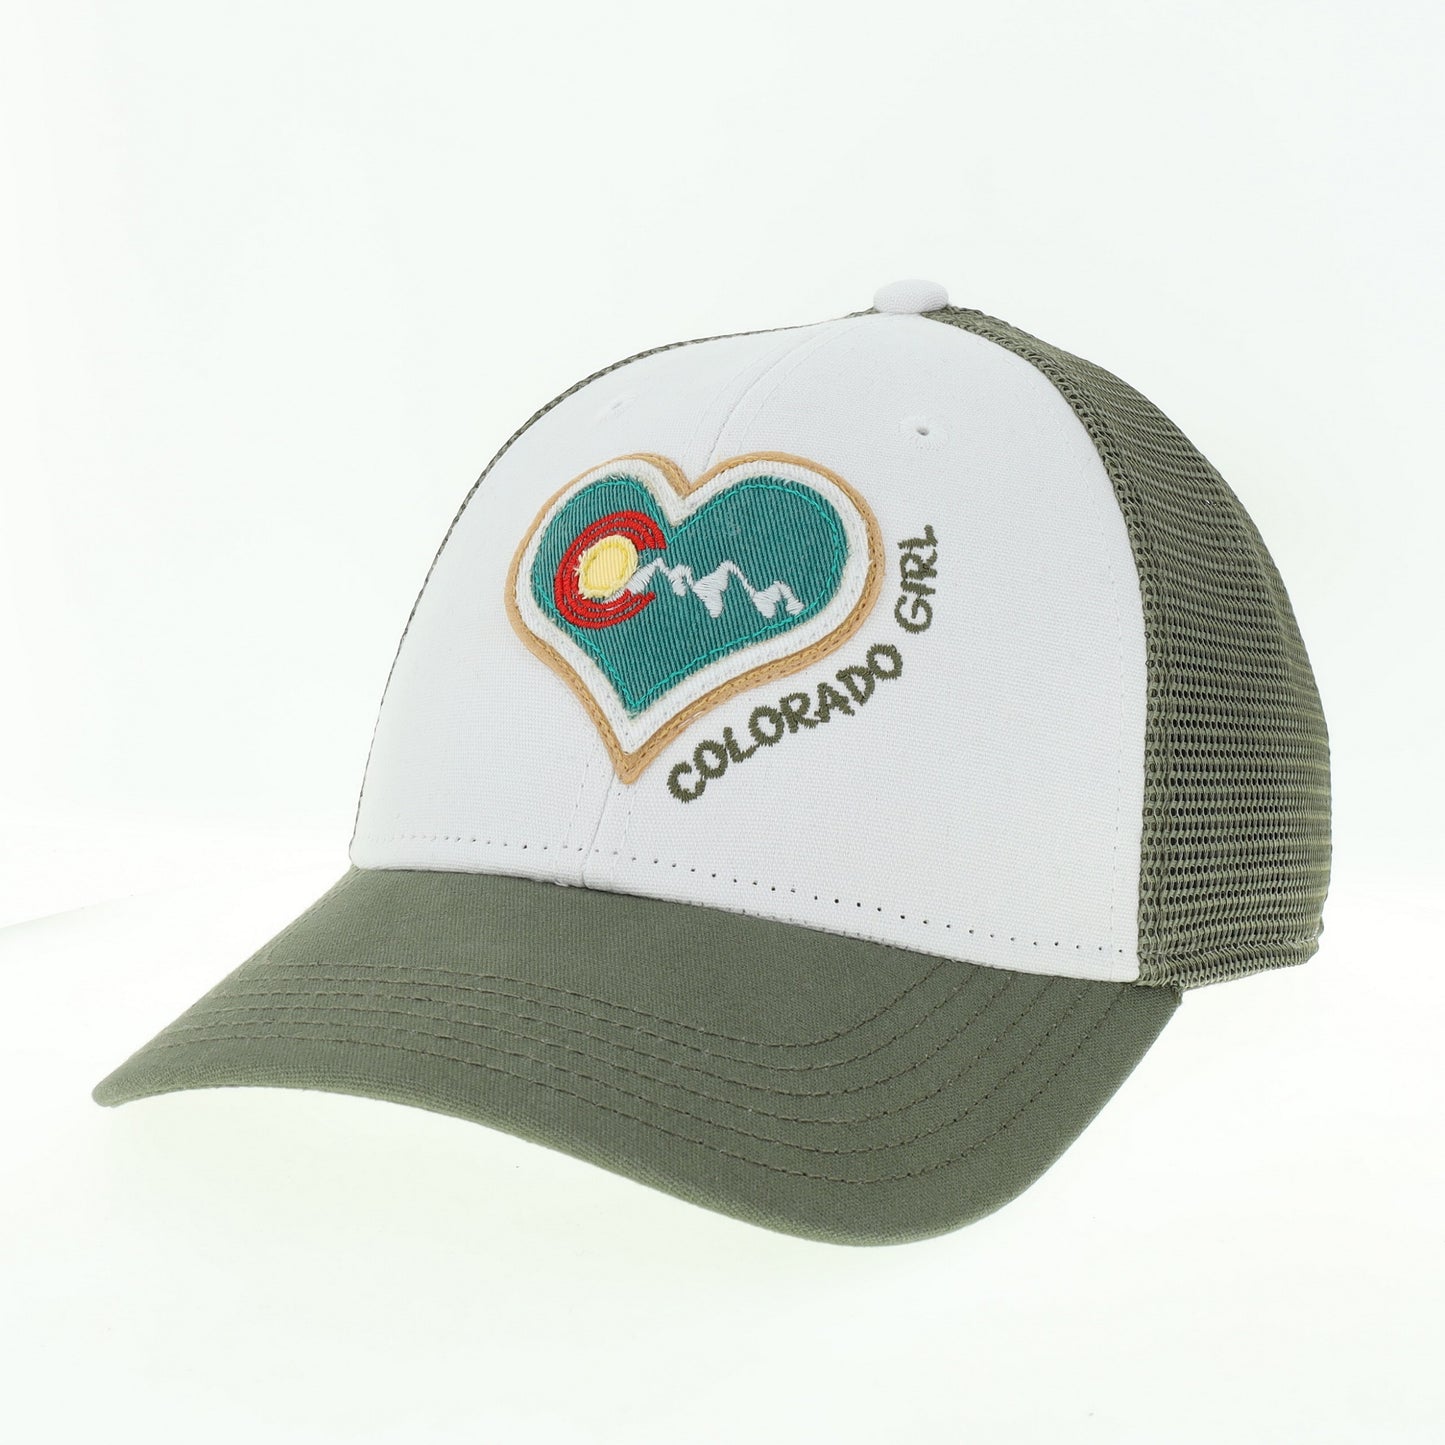 "New Colorado Girl in Town" Trucker Hat